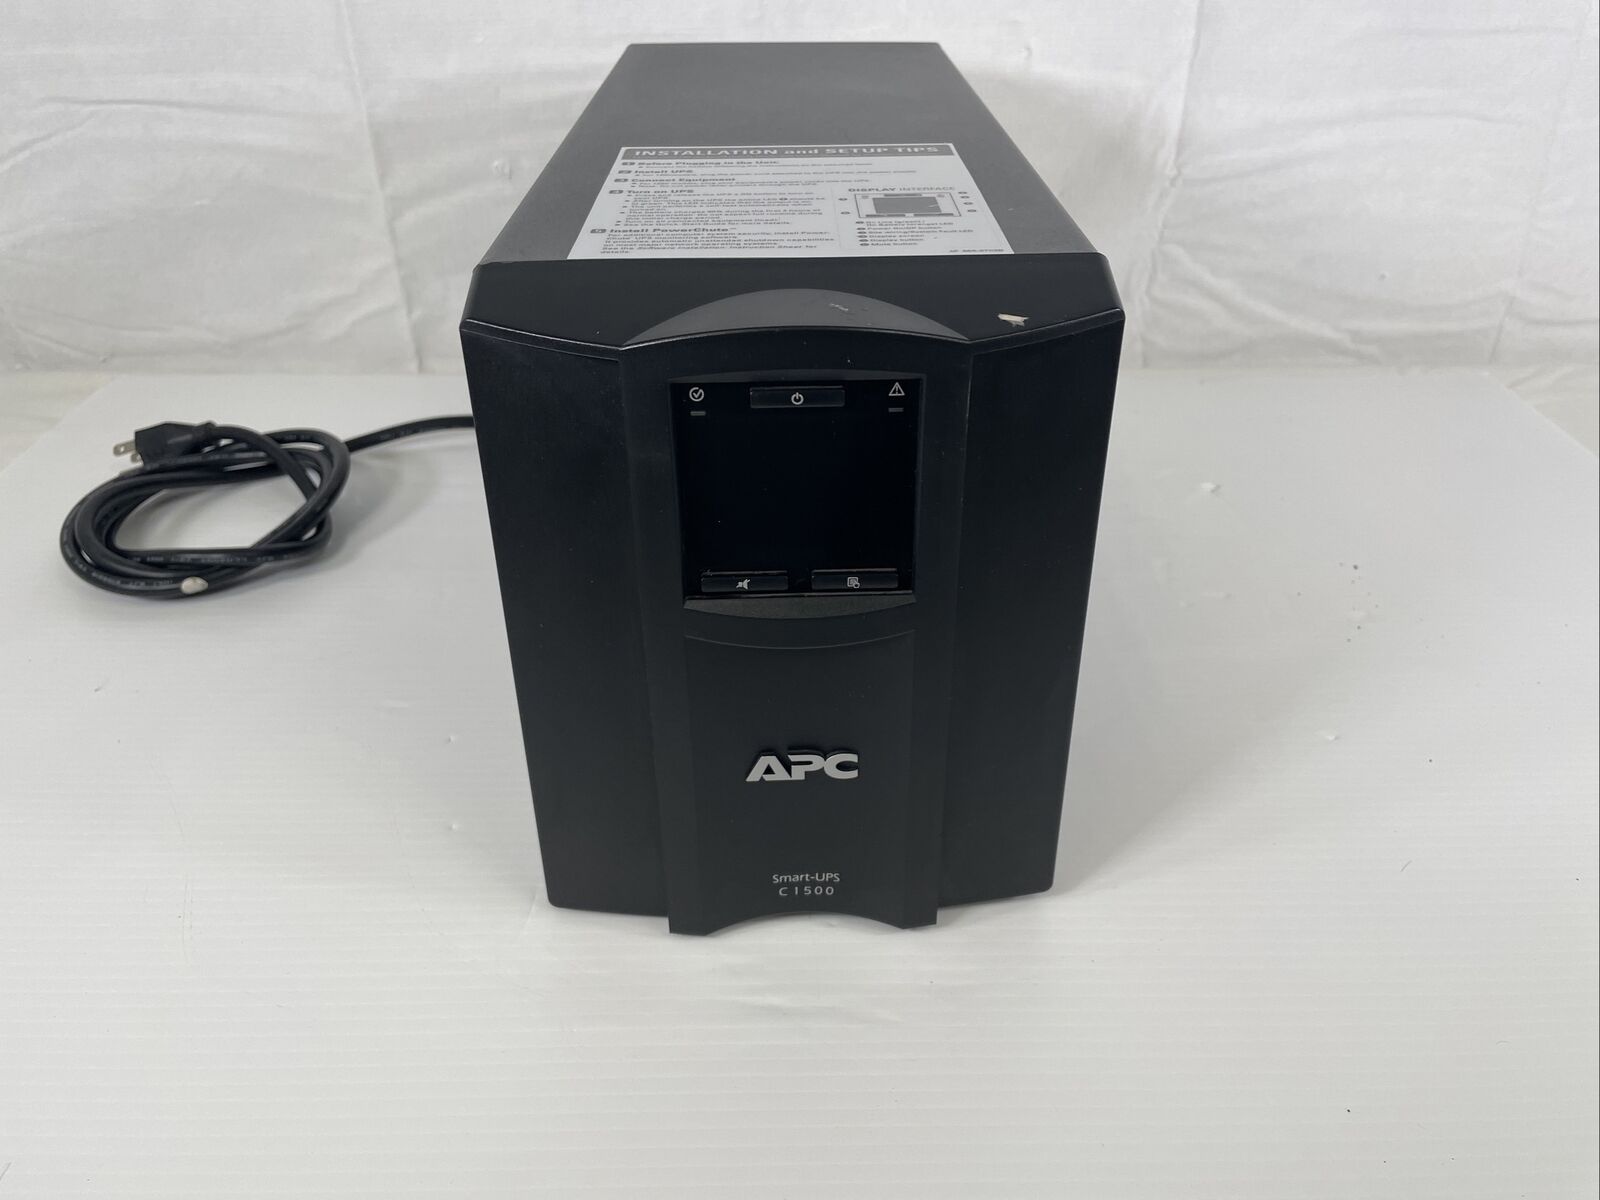 APC C1500 SMC1500 Smart UPS 1500VA 120V 8 Outlet No Batteries with Wire Harness